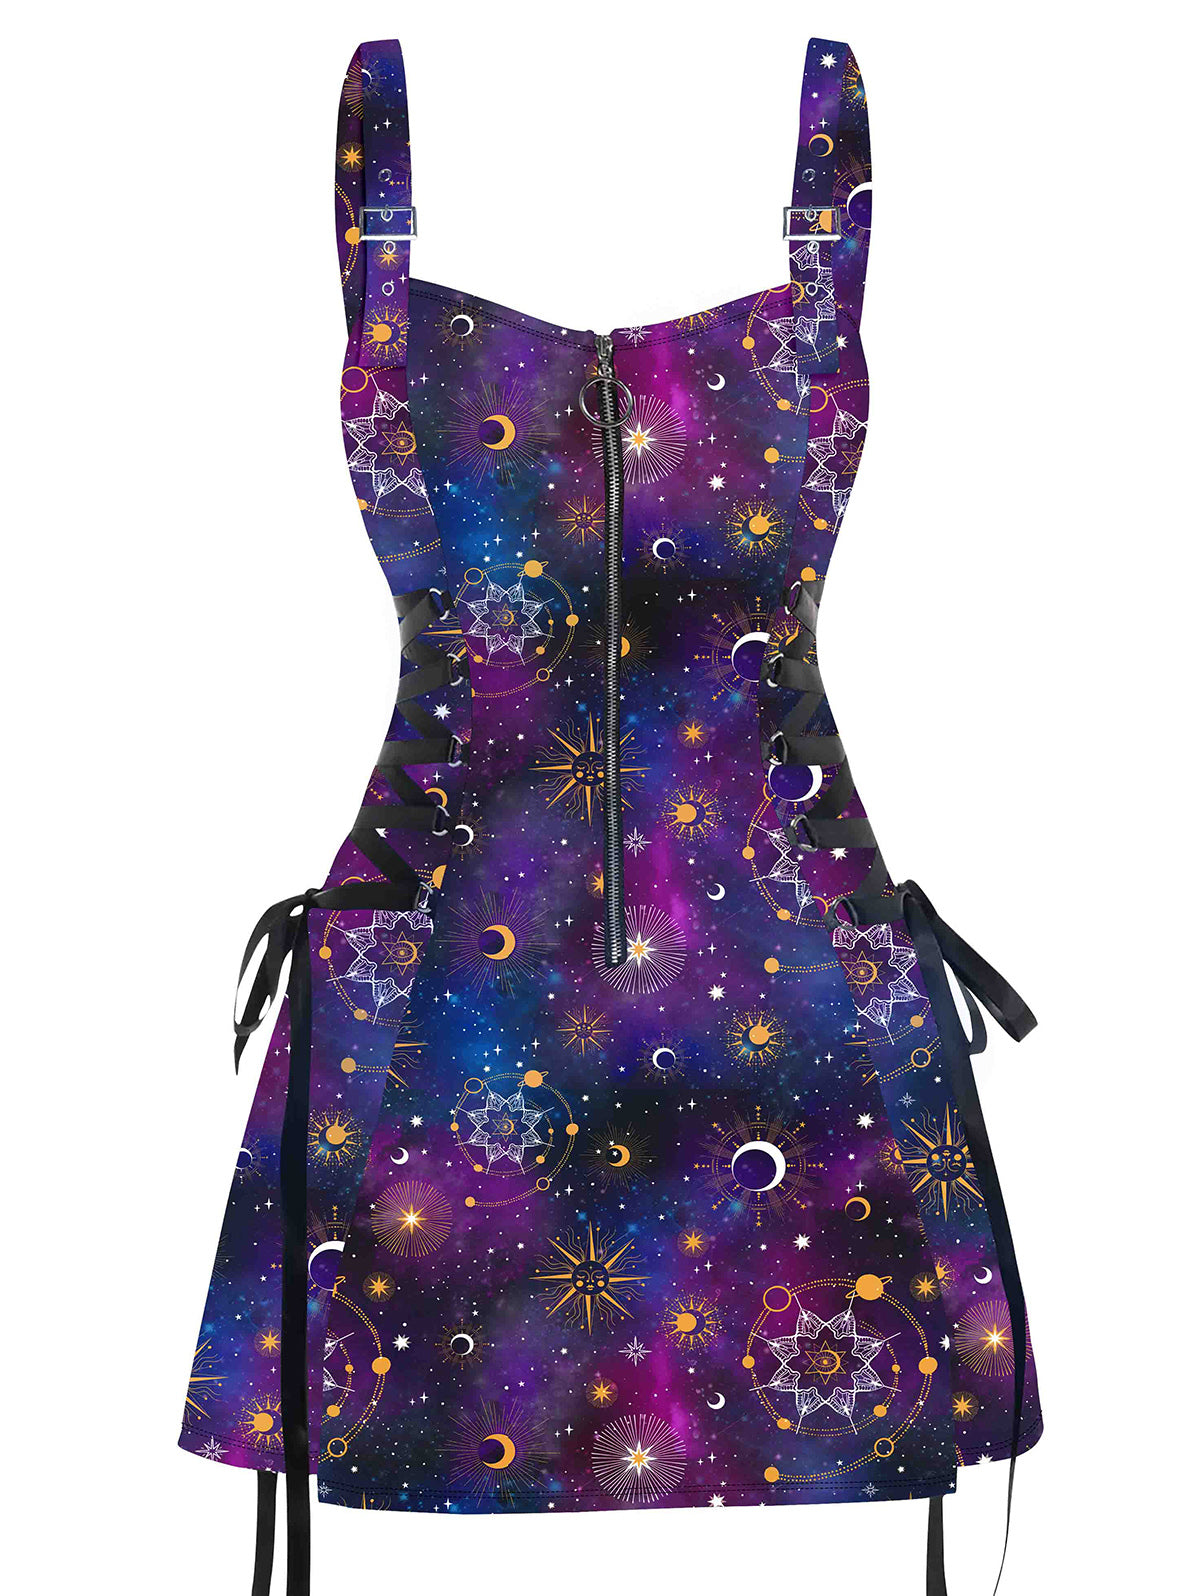 Celestial Whimsigoth Summer / Beach Mini Dress | Gothic, Emo Style Aesthetic